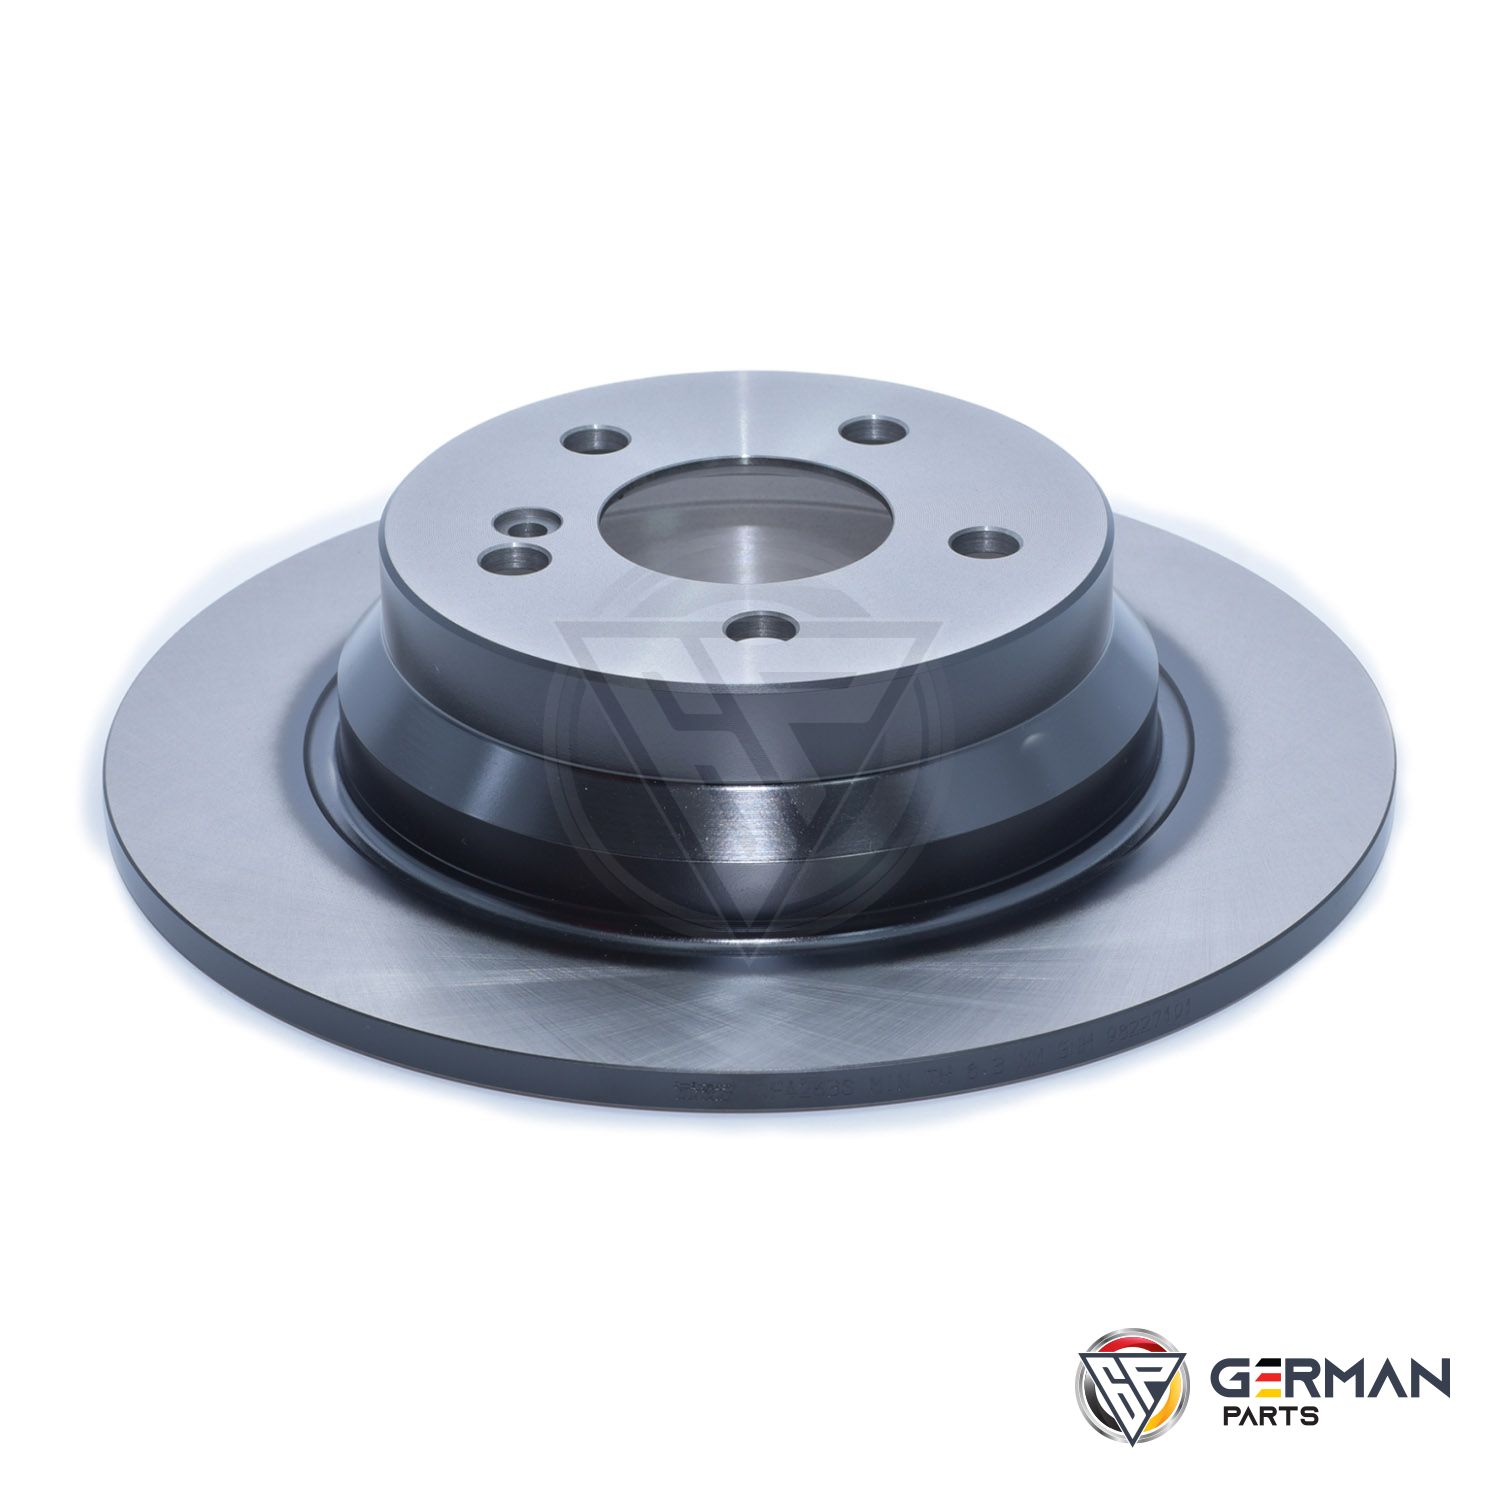 Buy TRW Rear Brake Disc 2214230712 - German Parts